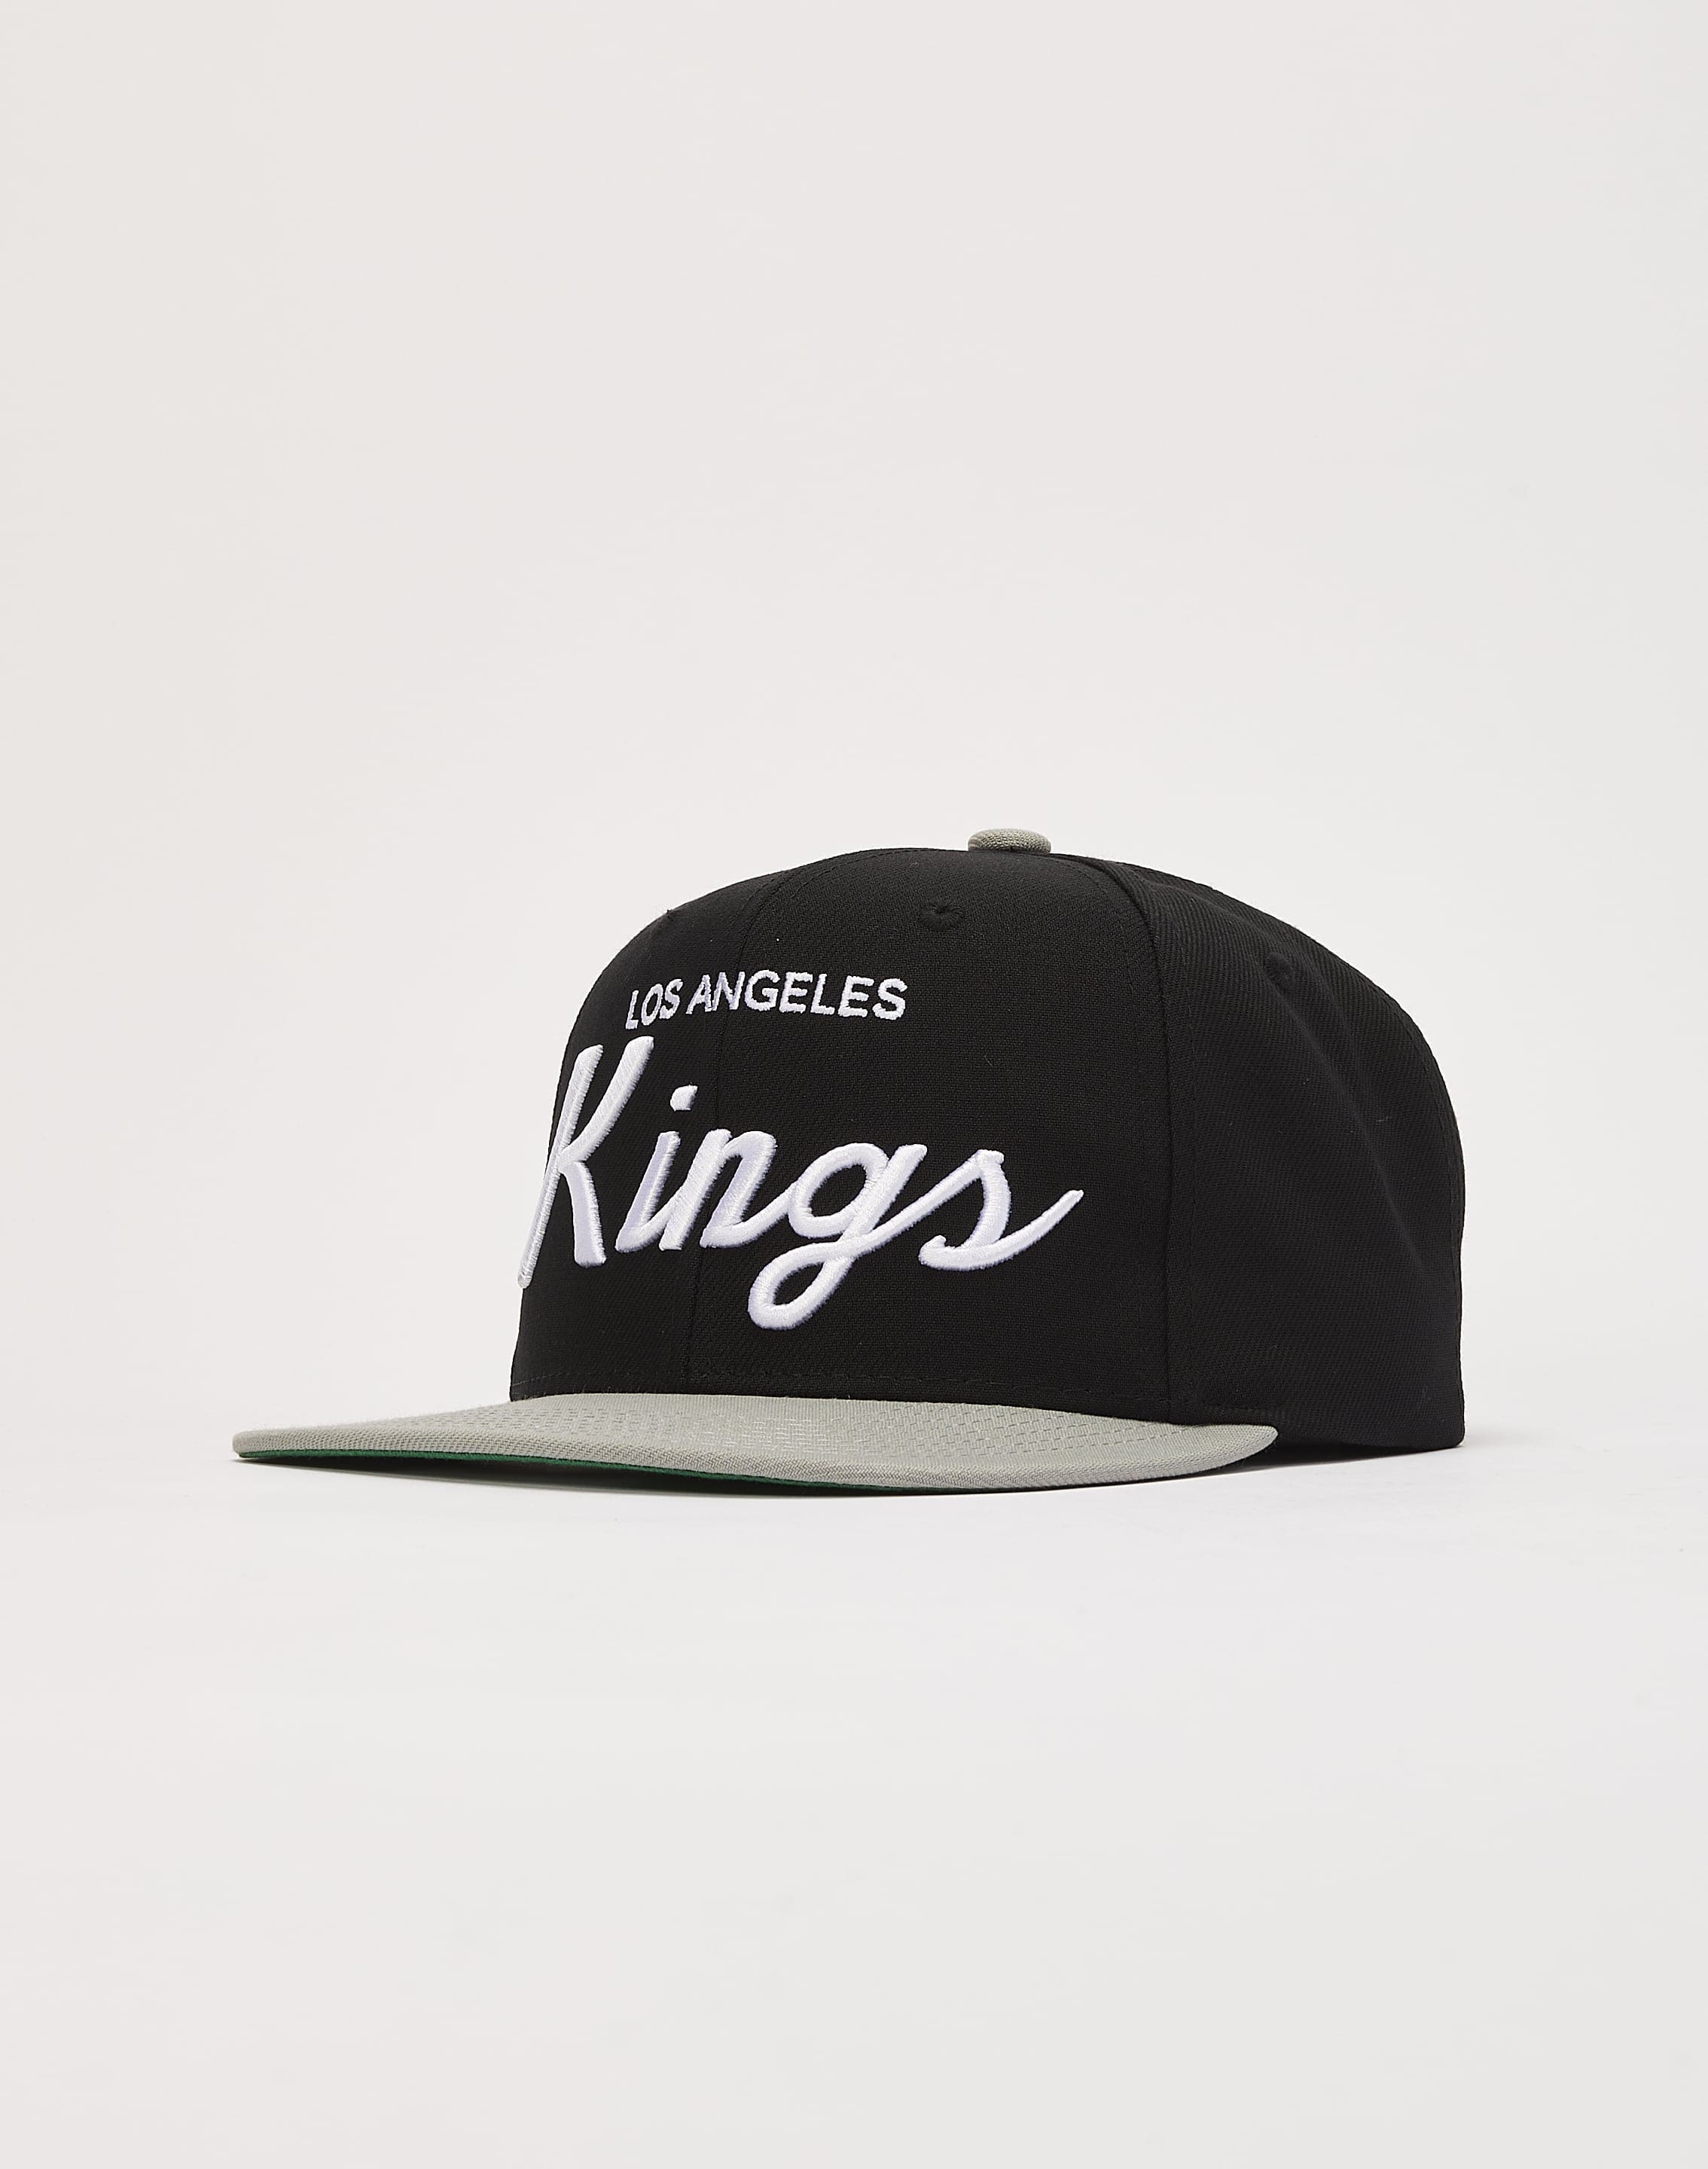 Los Angeles Kings Fashion Cap Vintage Cap Sports Cap for men and